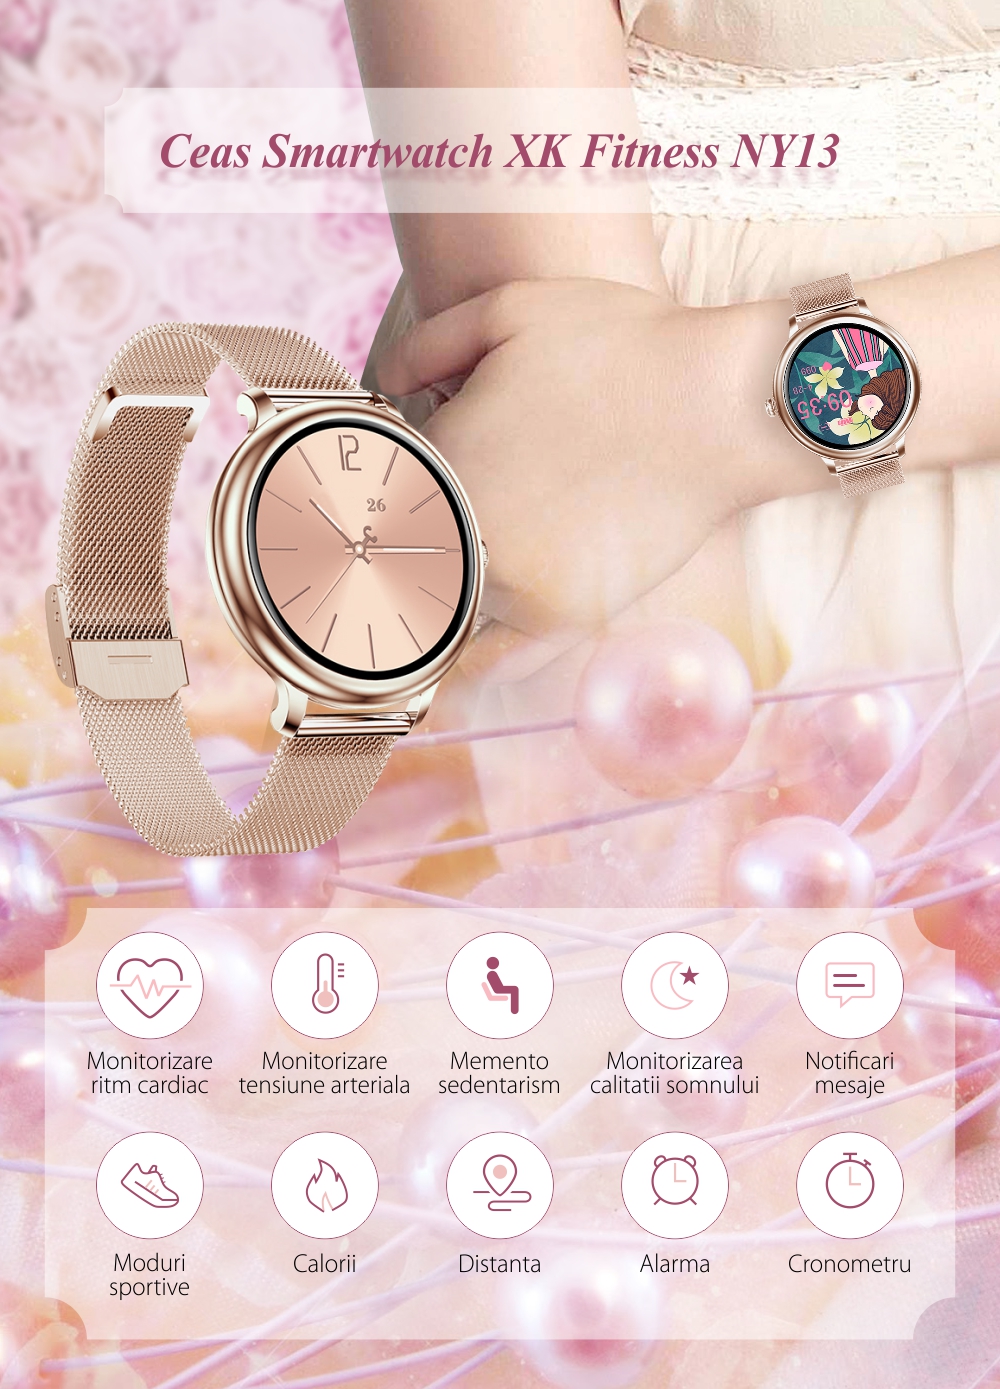 Ceas Smartwatch Dama XK Fitness NY13 cu Display 1.08 inch, Puls, Moduri sport, Metal, Auriu